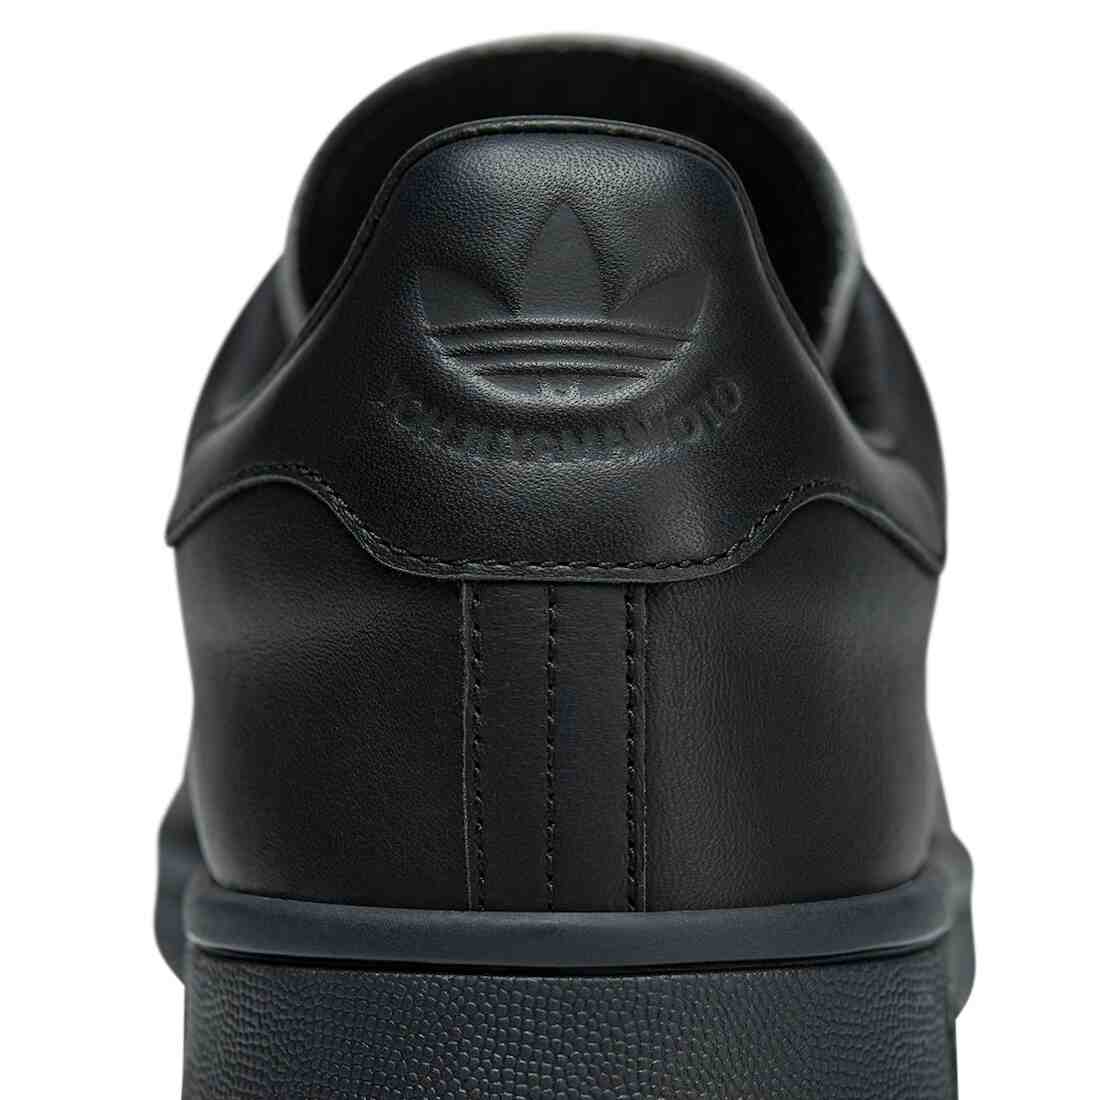 运动鞋, Stan Smith, Black, adidas Y-3, Adidas Stan Smith, Adidas - Yohji Yamamoto x adidas Stan Smith系列将于10月3日发布。